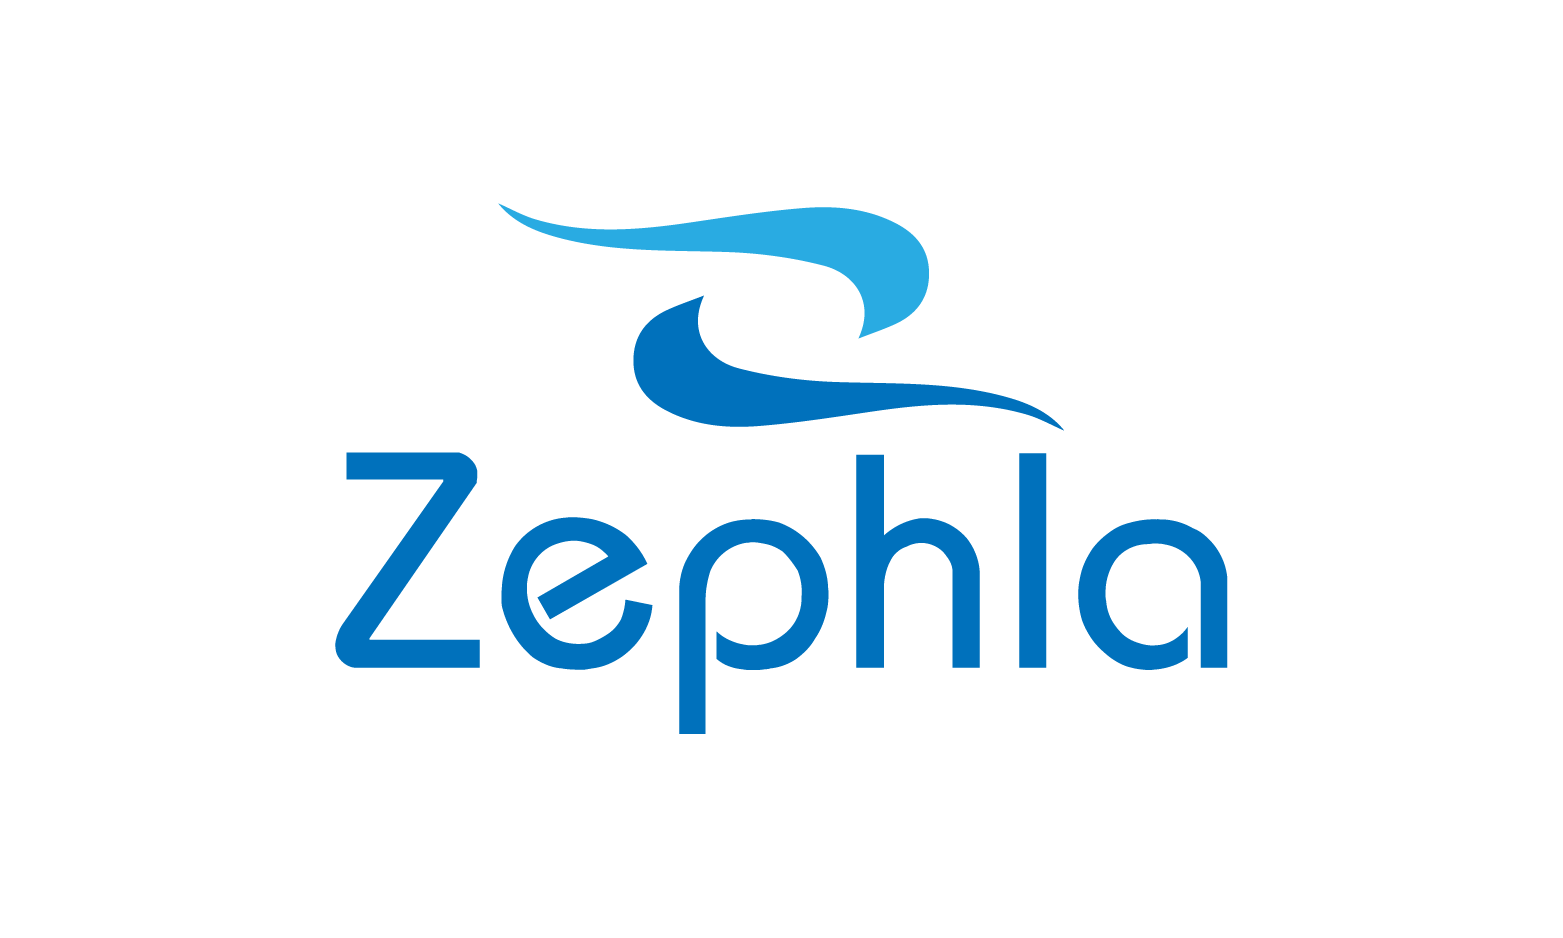 Zephla.com - Creative brandable domain for sale